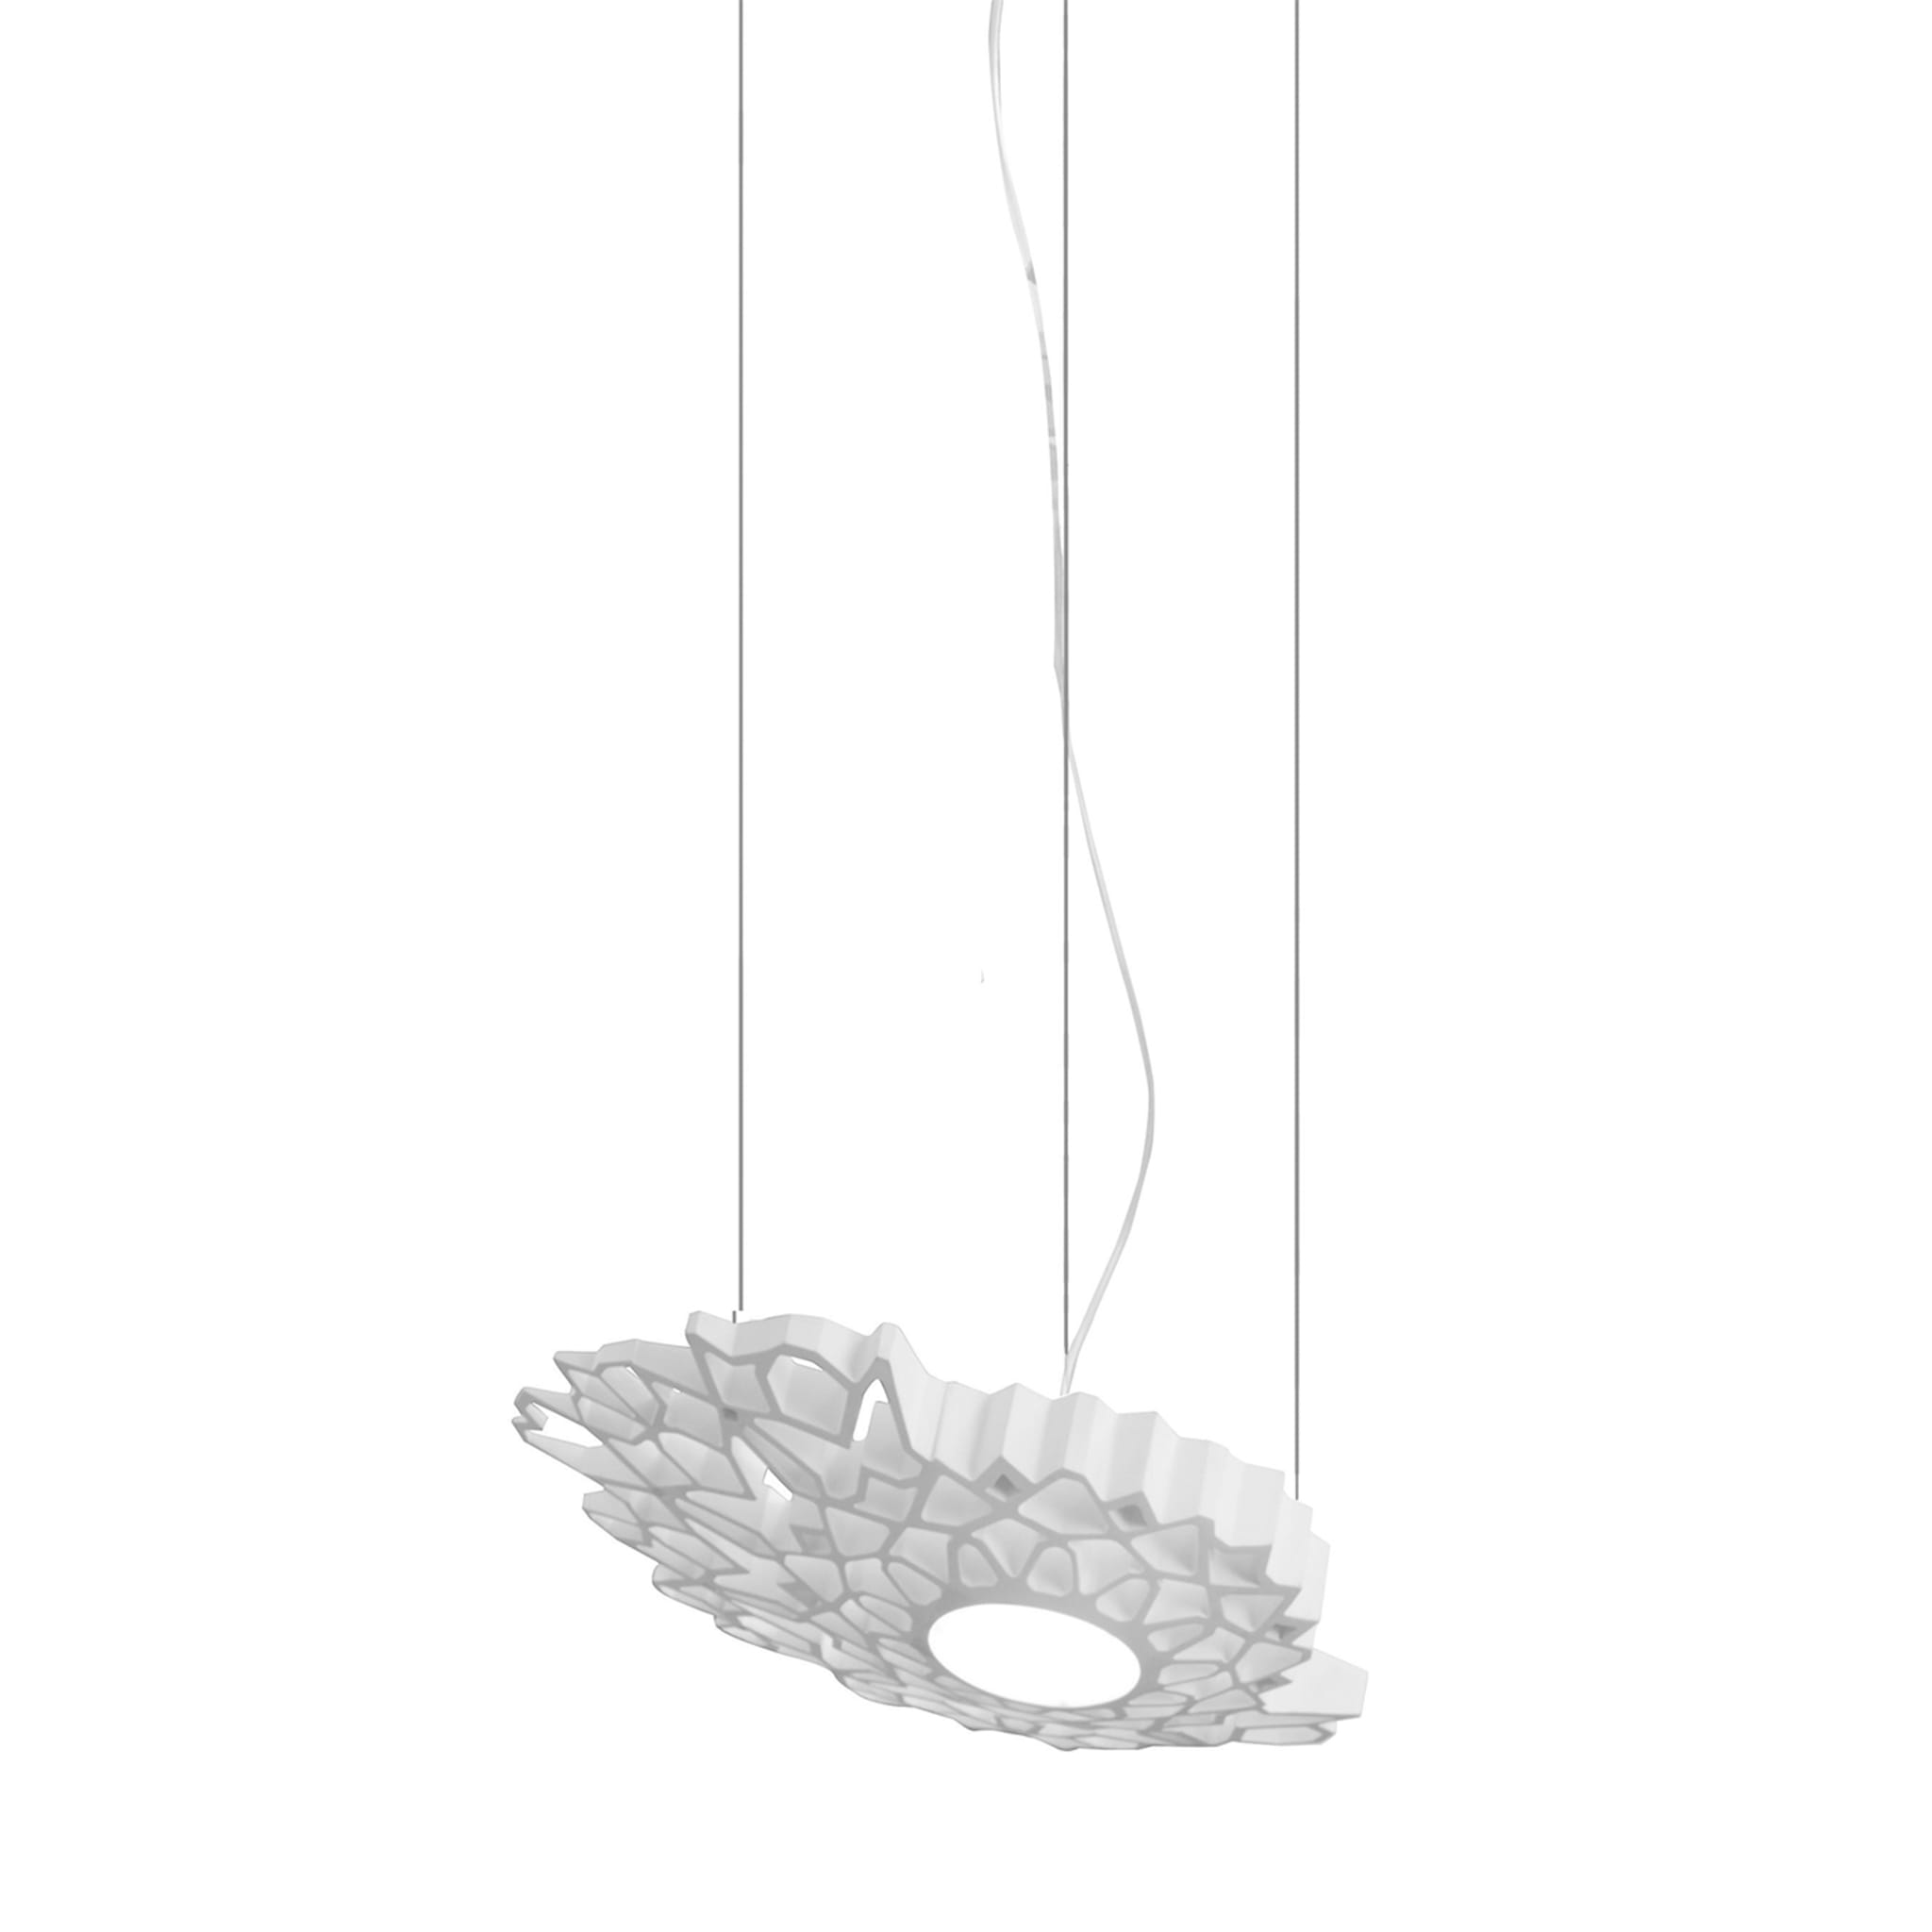 Notredame S White Pendant Lamp by Luca De Bona & Dario De Meo - Main view